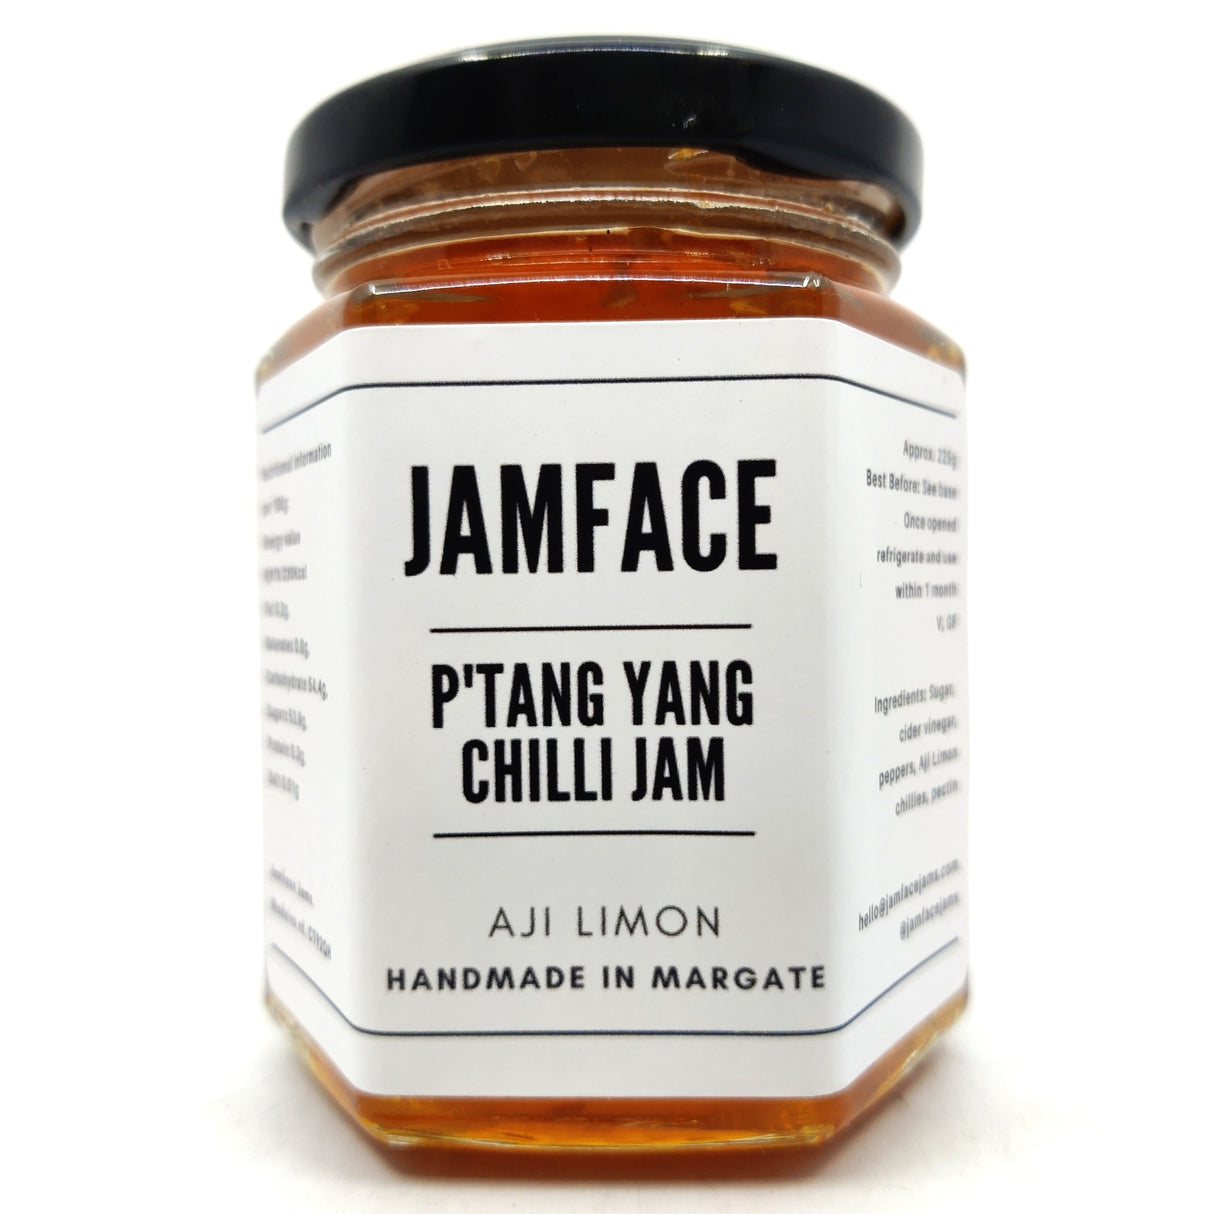 Jamface Ptang Yang Chilli Jam (226g)-Hop Burns & Black